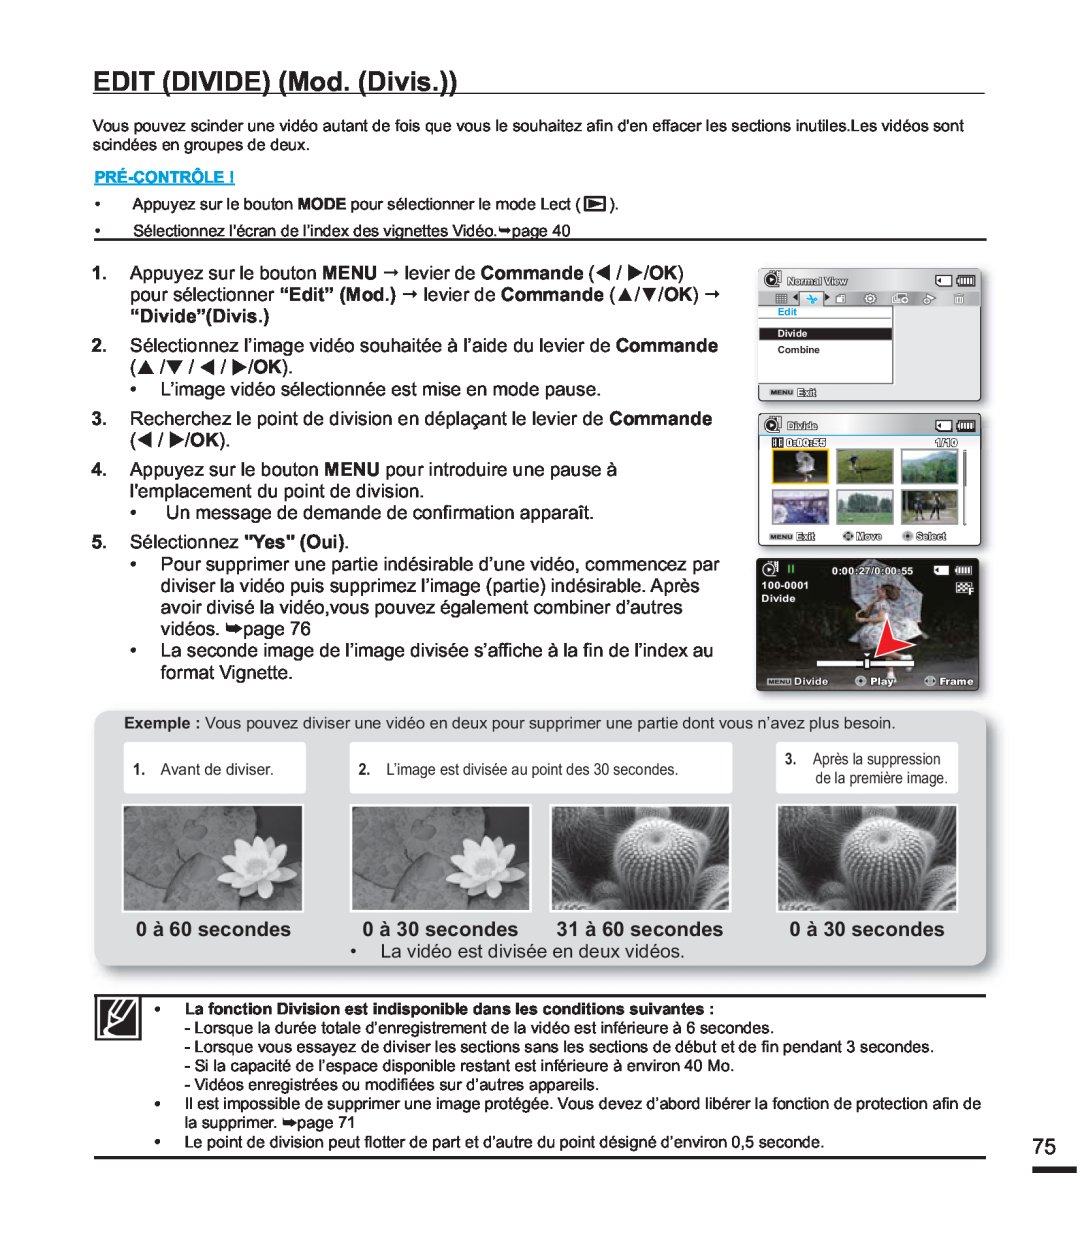 Samsung SMX-F400BP/EDC manual EDIT DIVIDE Mod. Divis, 0 à 60 secondes, 0 à 30 secondes, 31 à 60 secondes, “Divide”Divis 